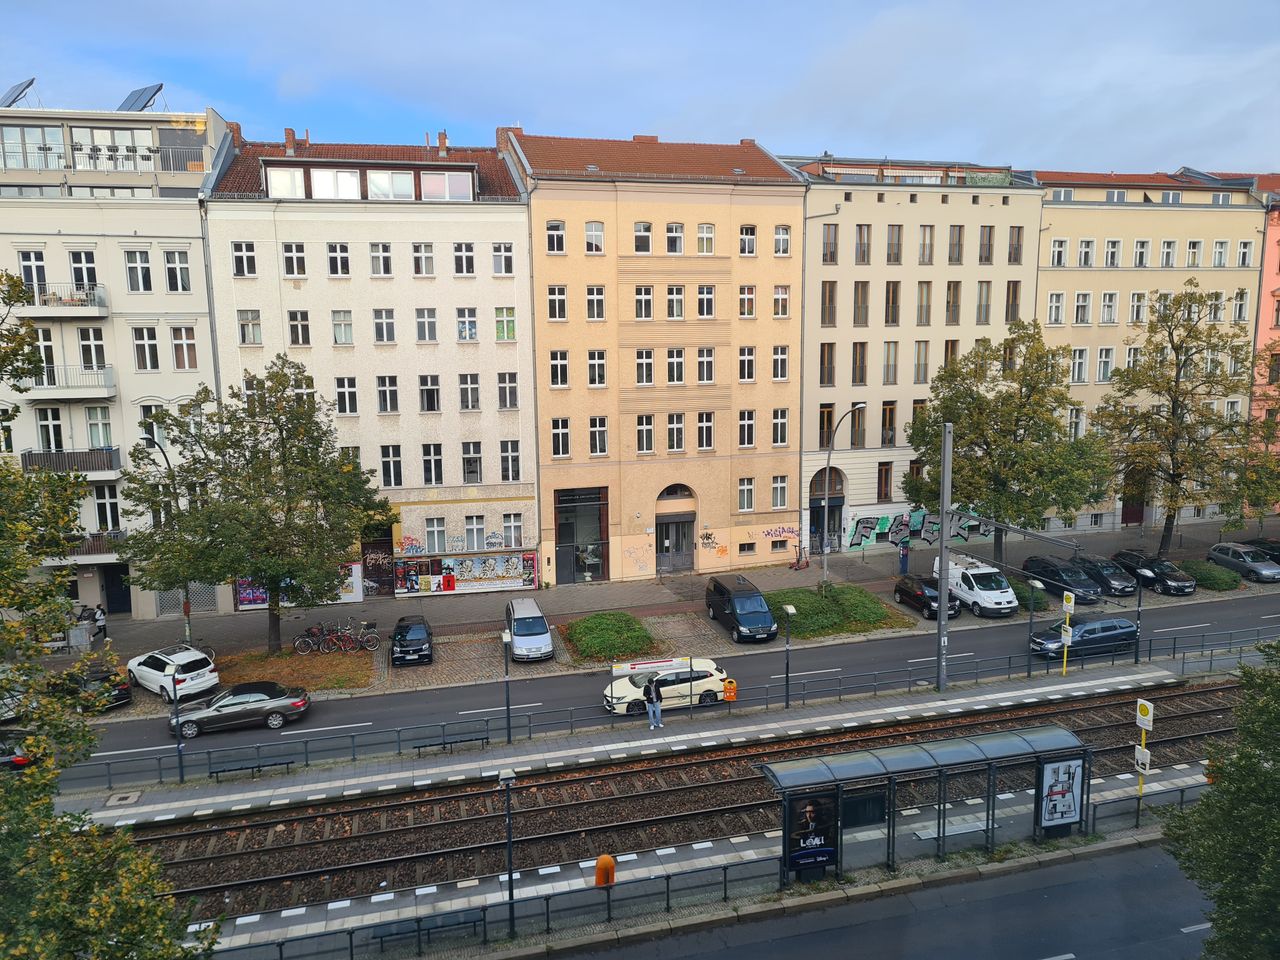 Spacouis modern Apartment in best area of Berlin